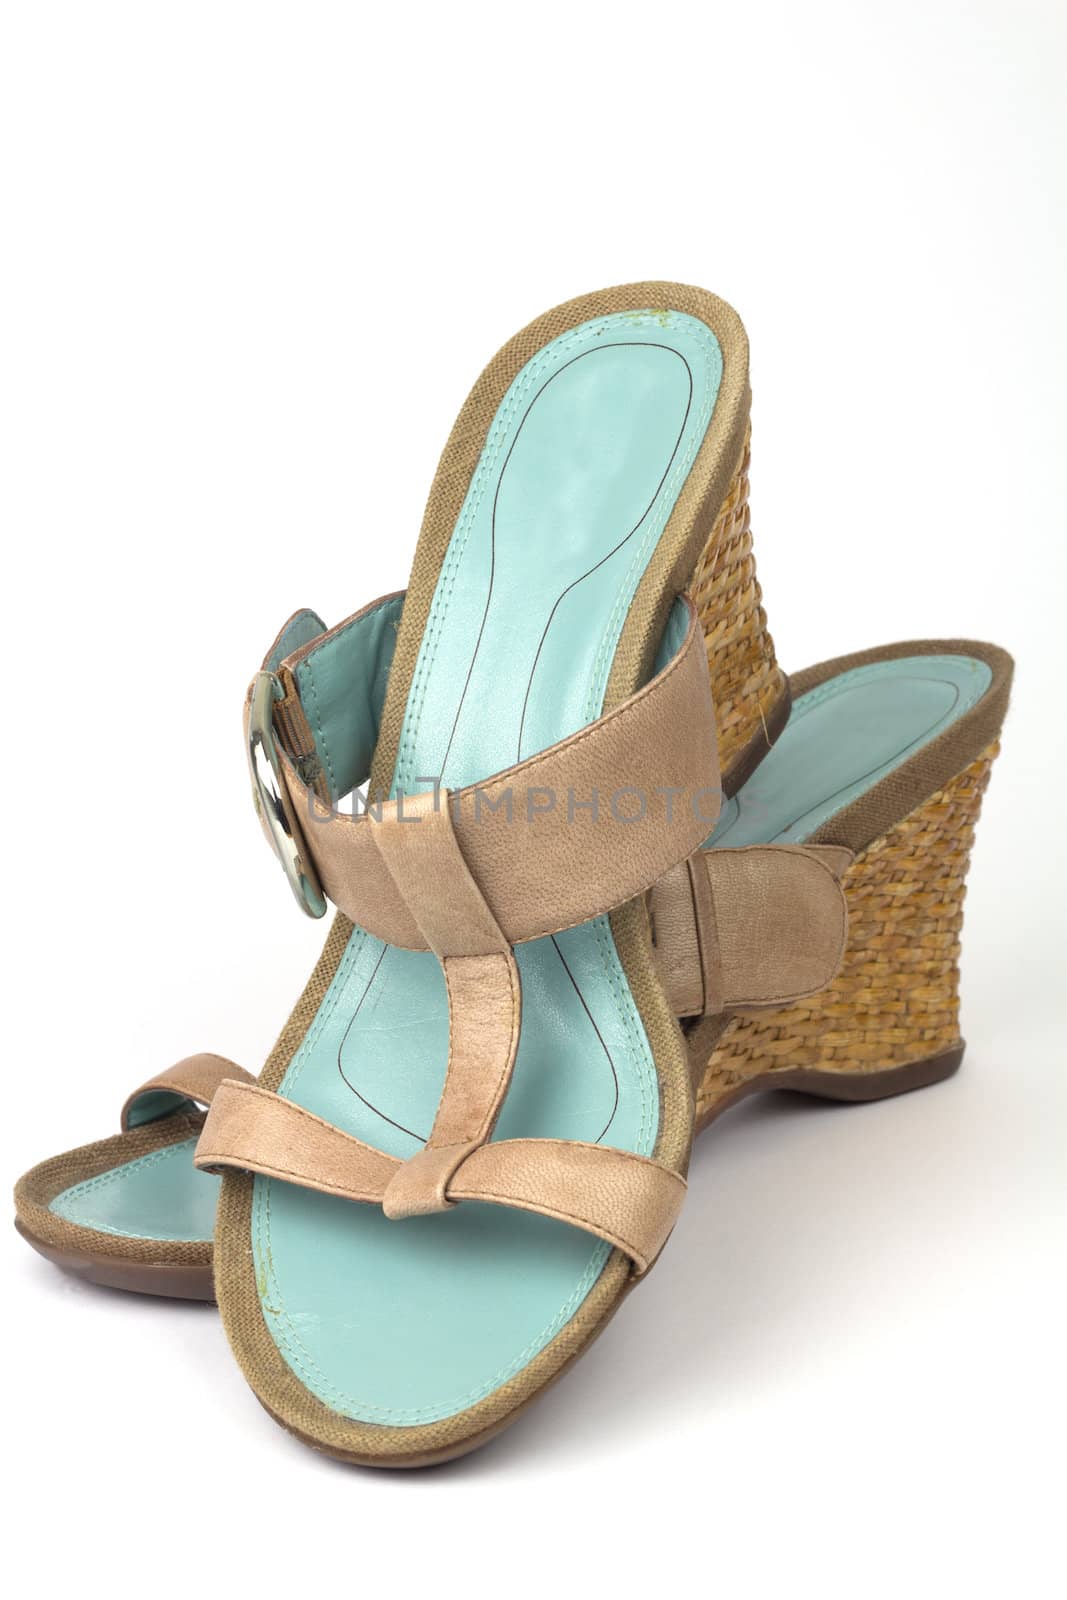 A pair of Ladies Sandals